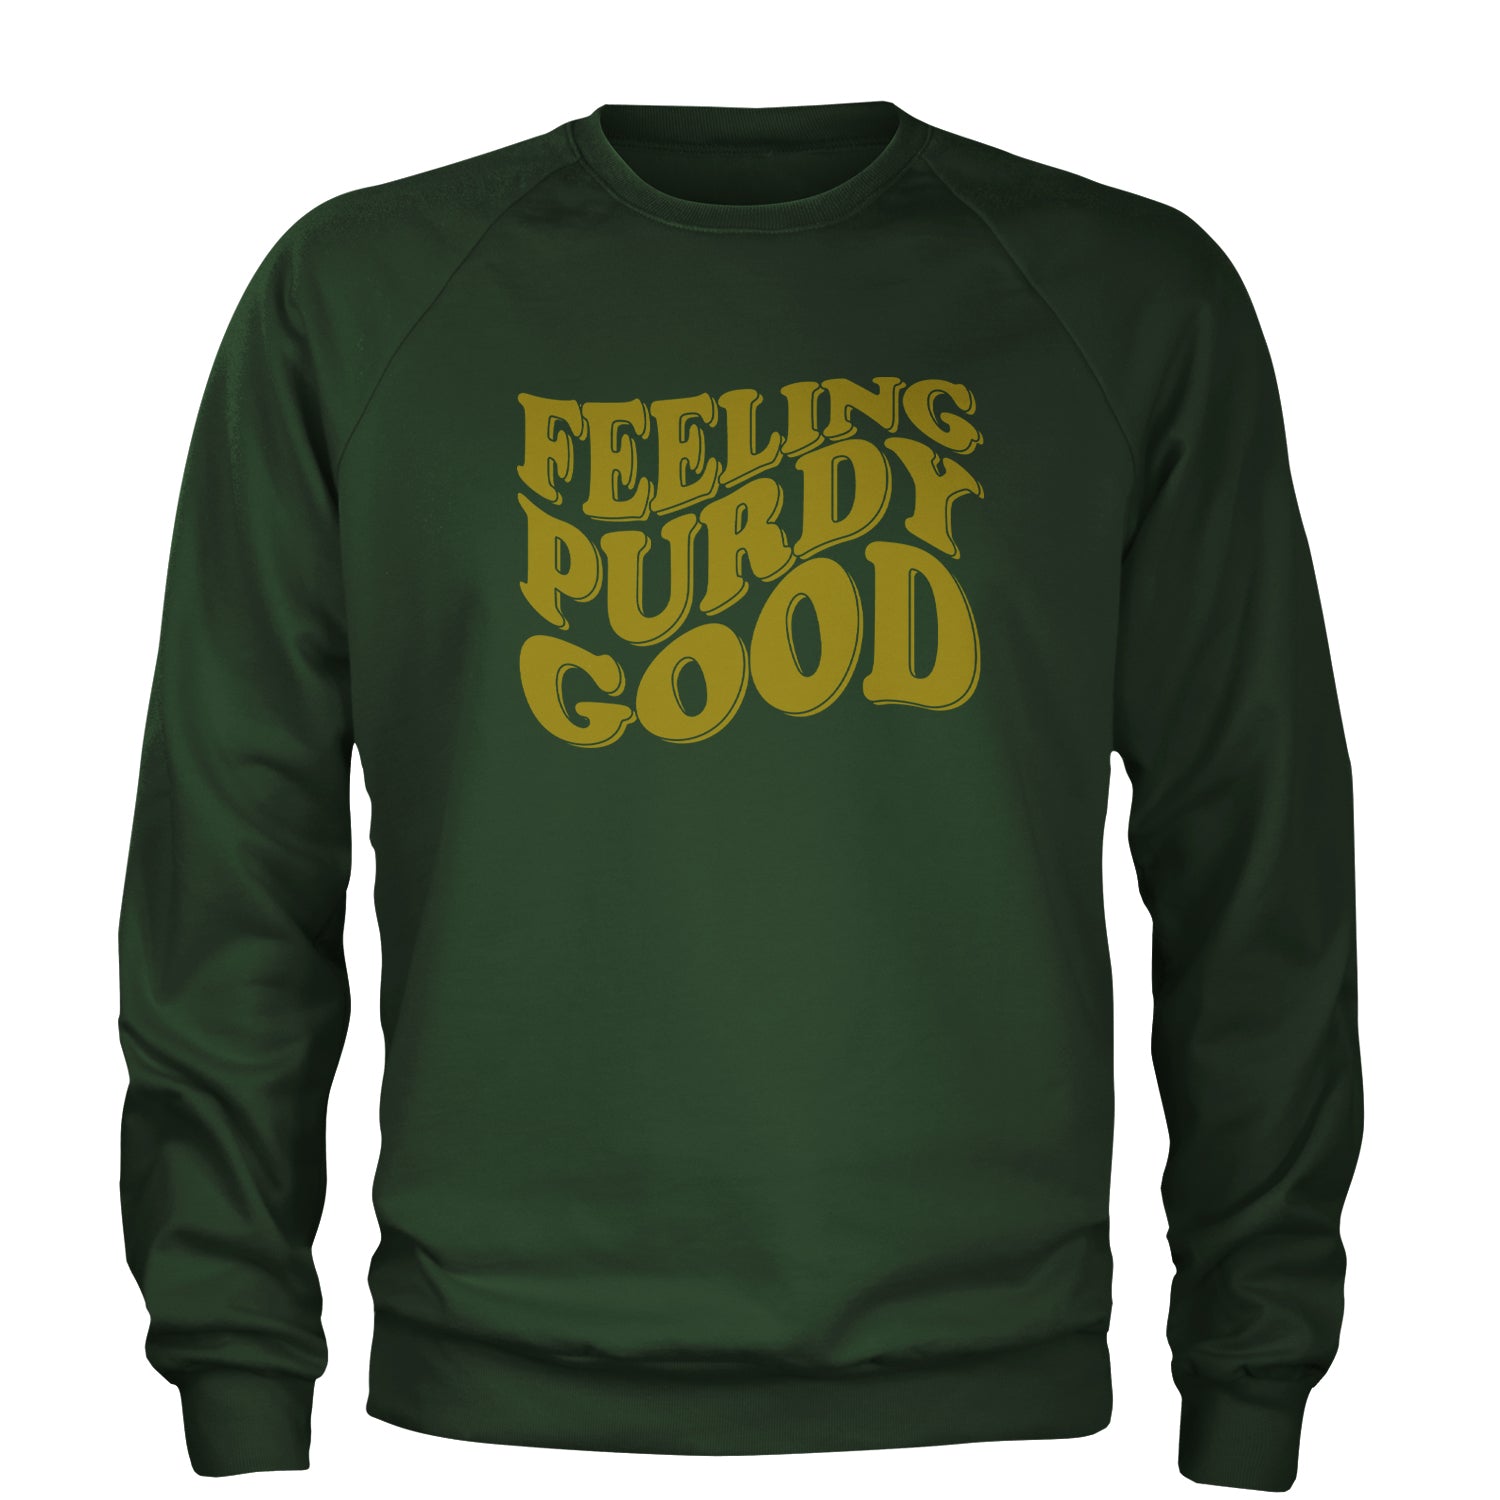 Feeling Purdy Good Adult Crewneck Sweatshirt 13, football by Expression Tees